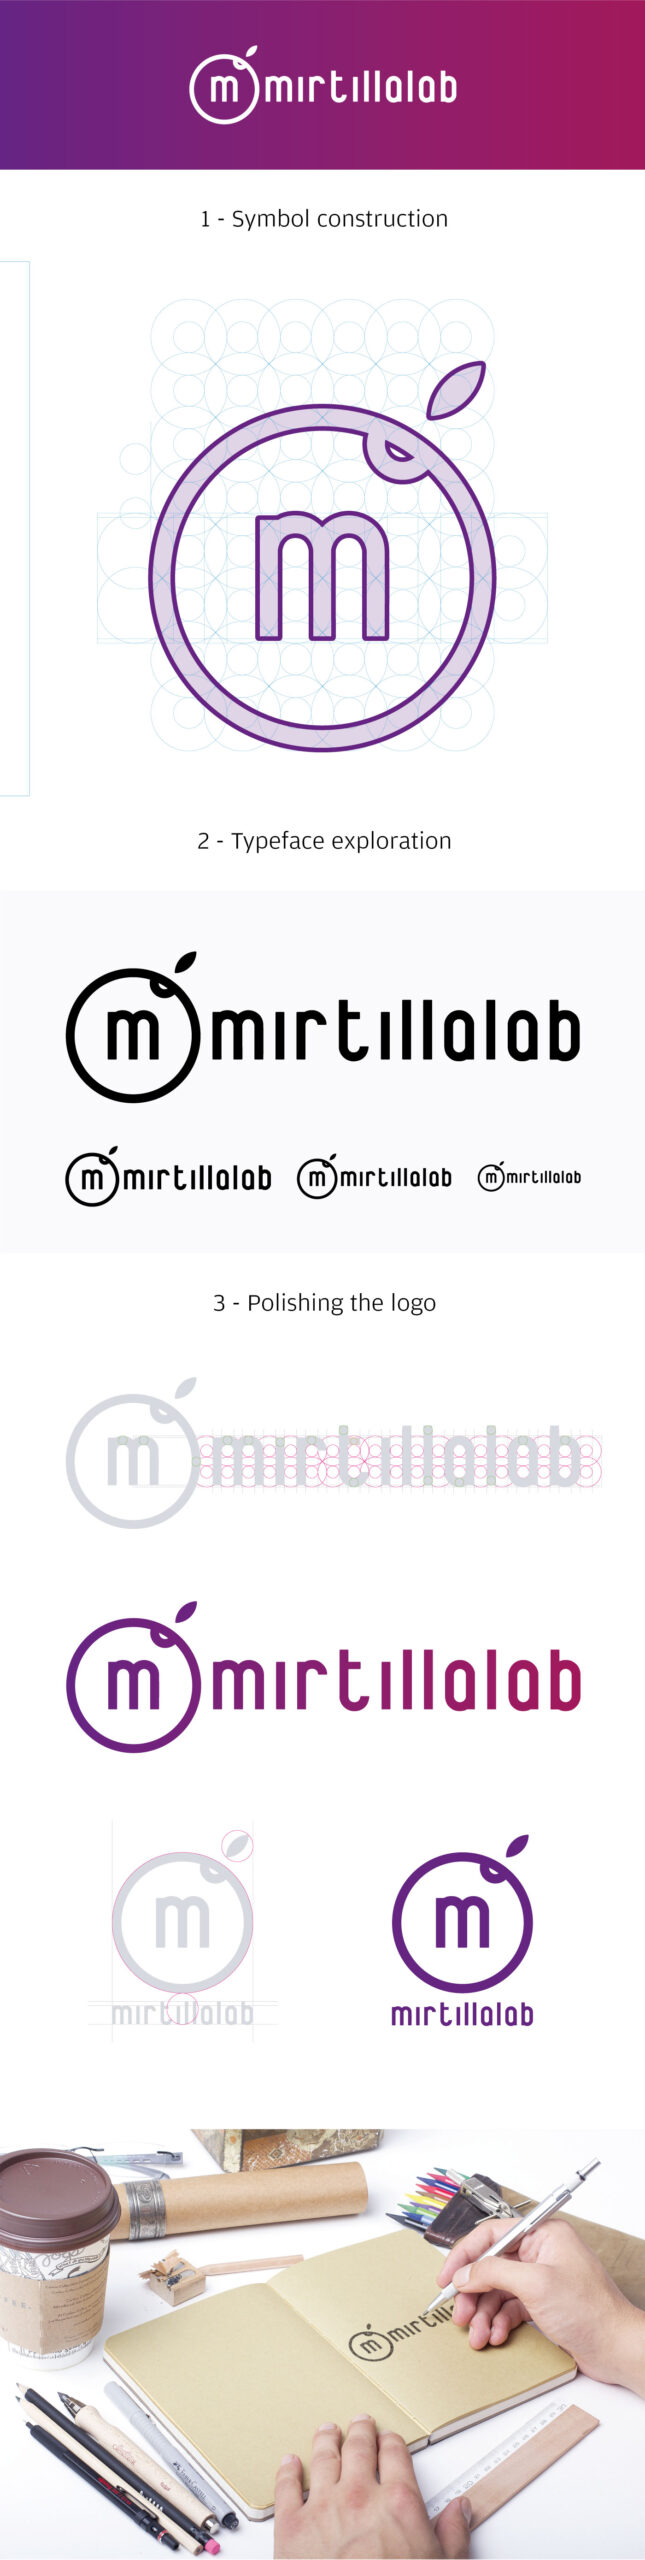 mirtilla-lab-style-guide-webb1